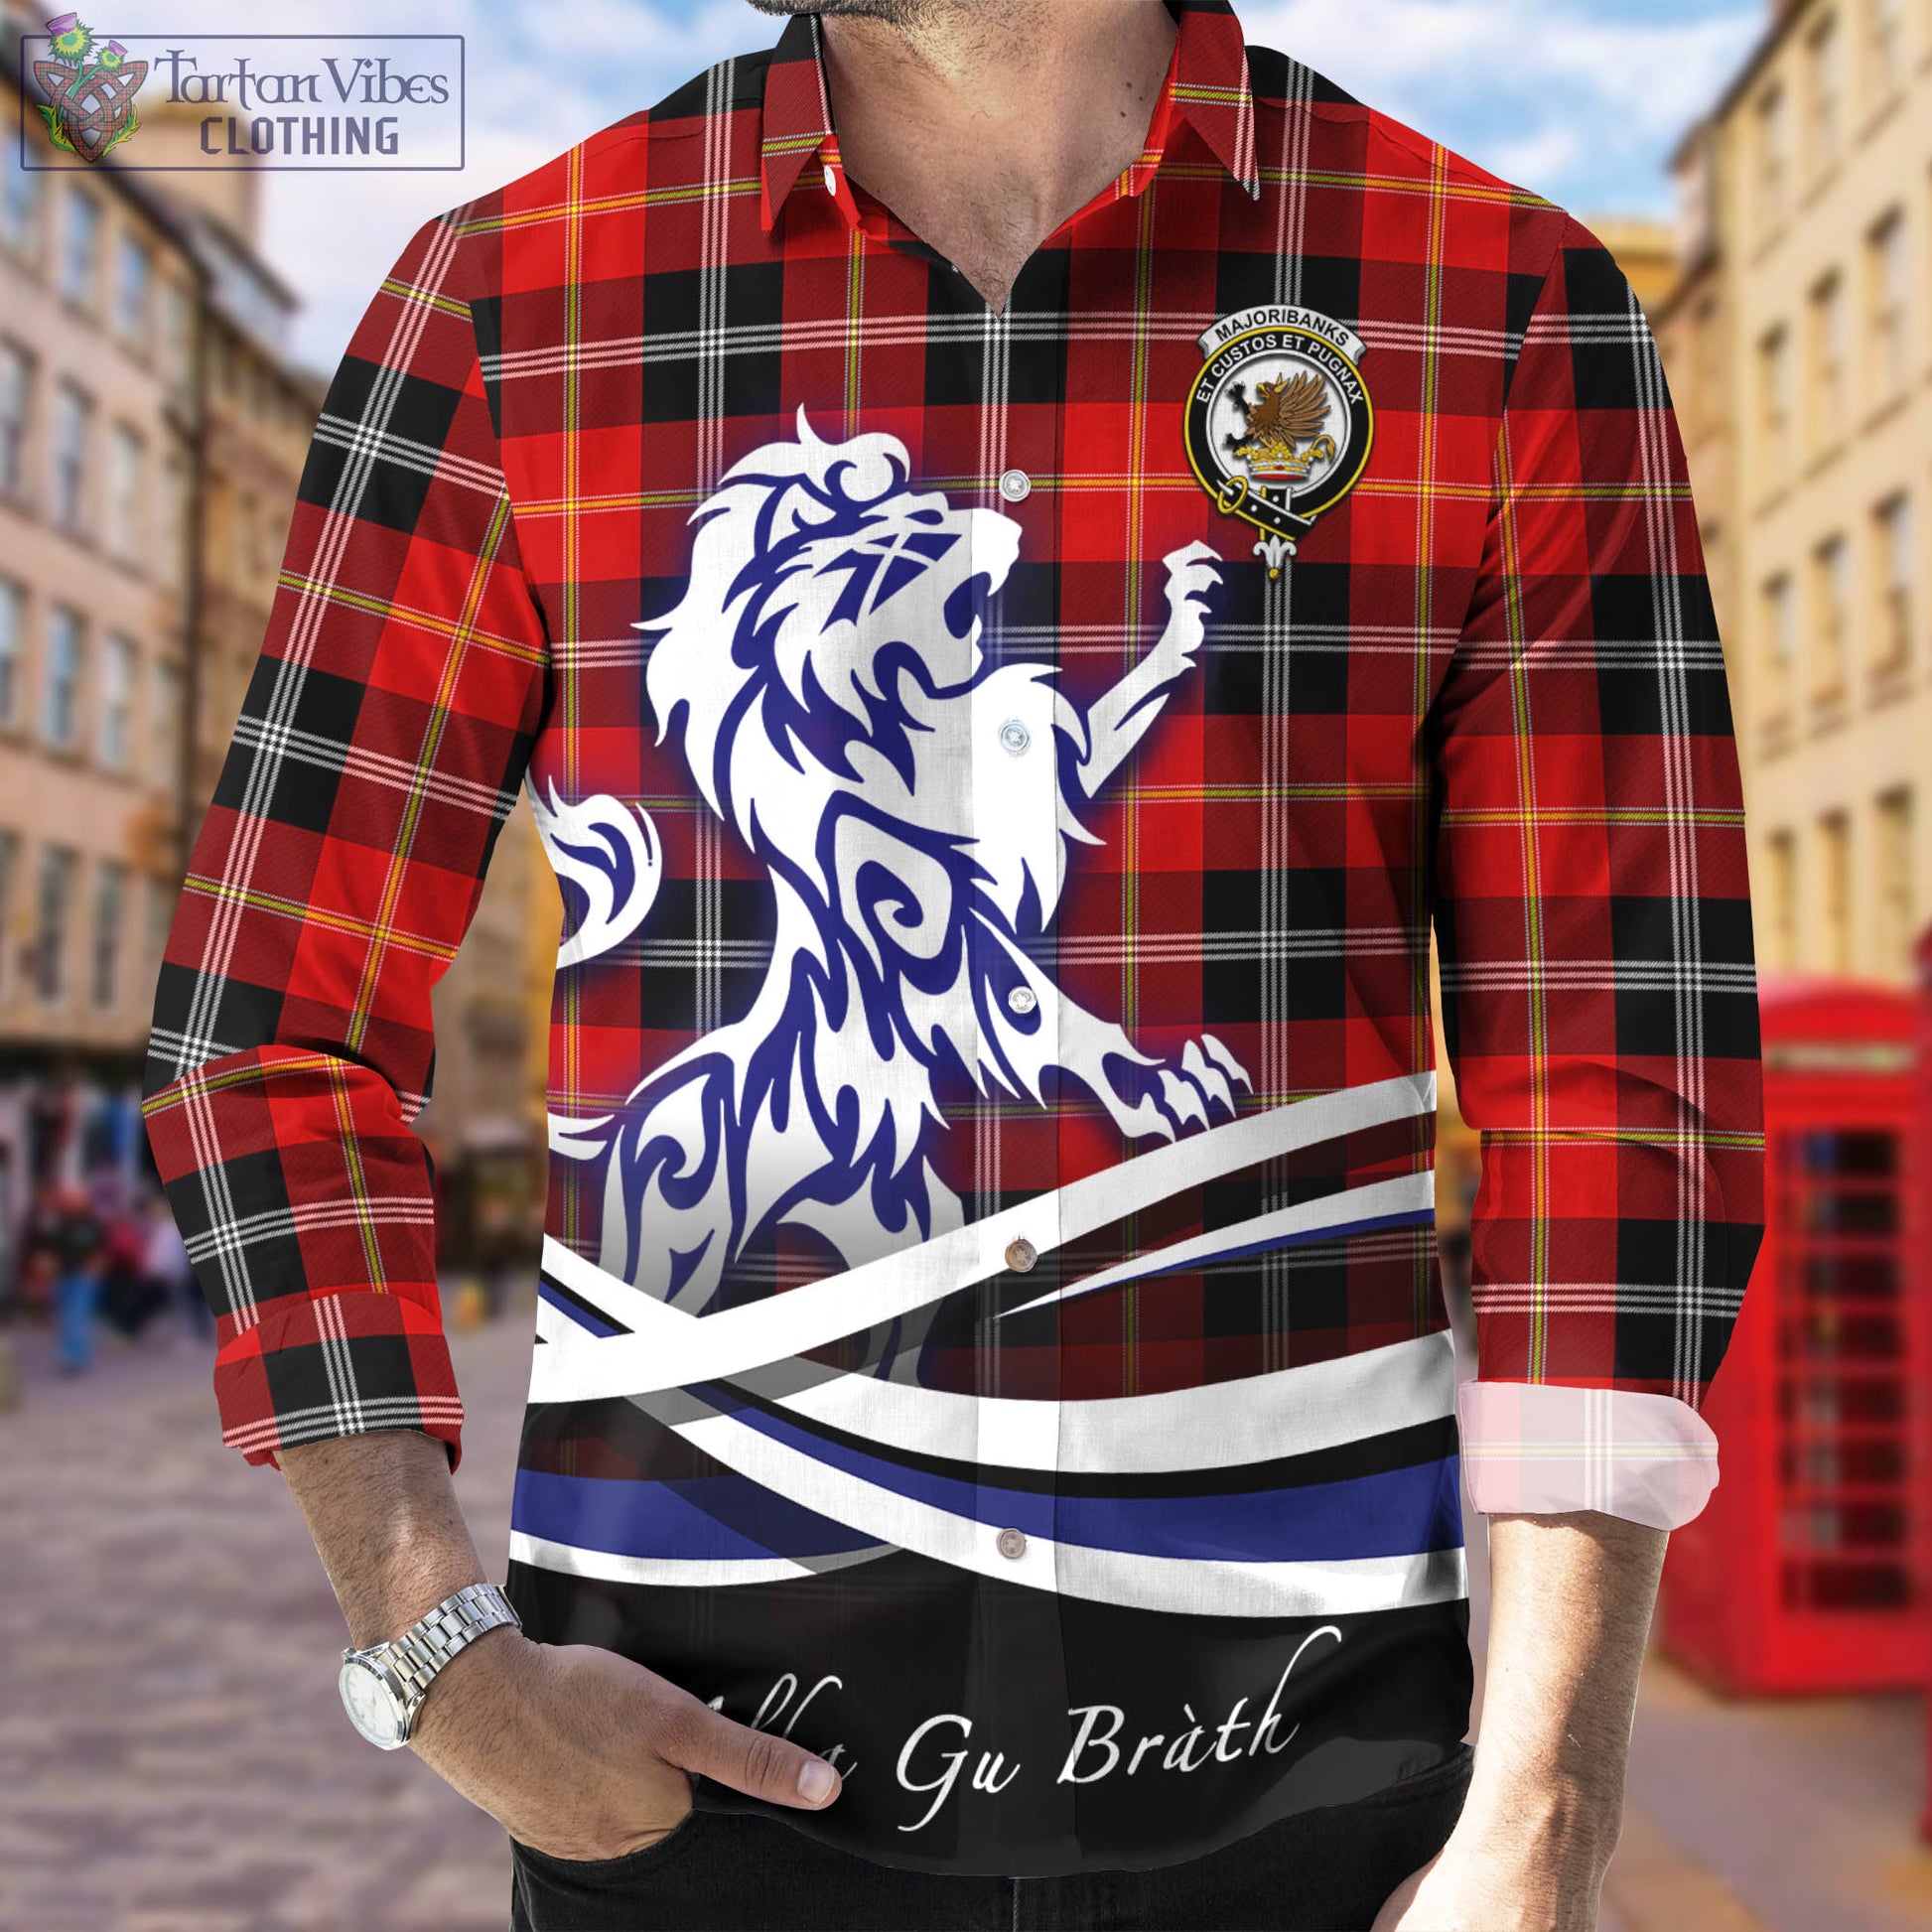 majoribanks-tartan-long-sleeve-button-up-shirt-with-alba-gu-brath-regal-lion-emblem